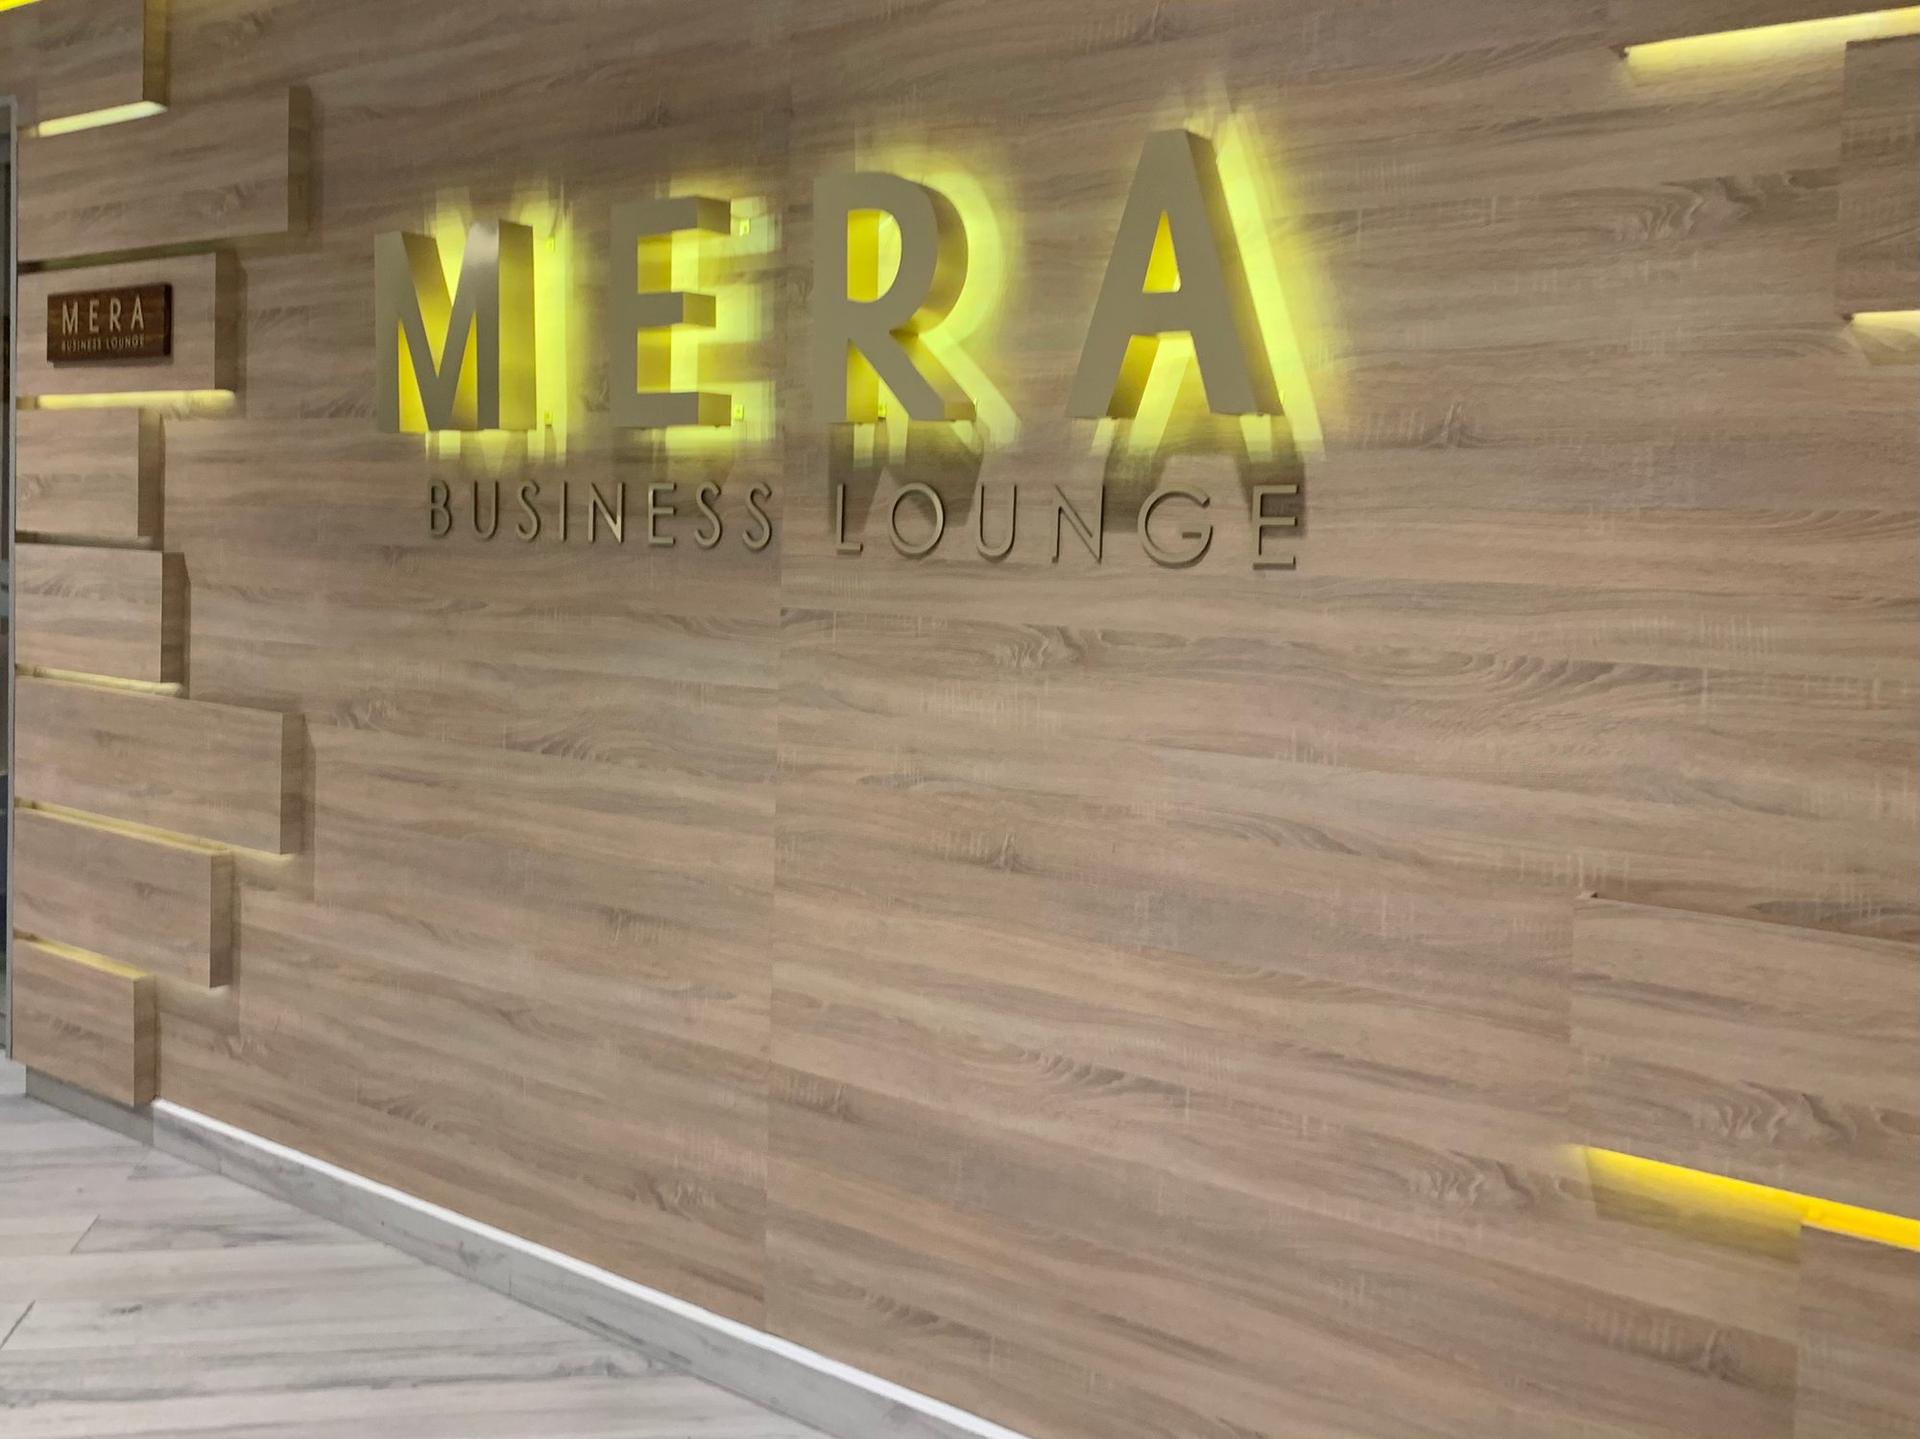 Mera Business Lounge (National) image 13 of 31